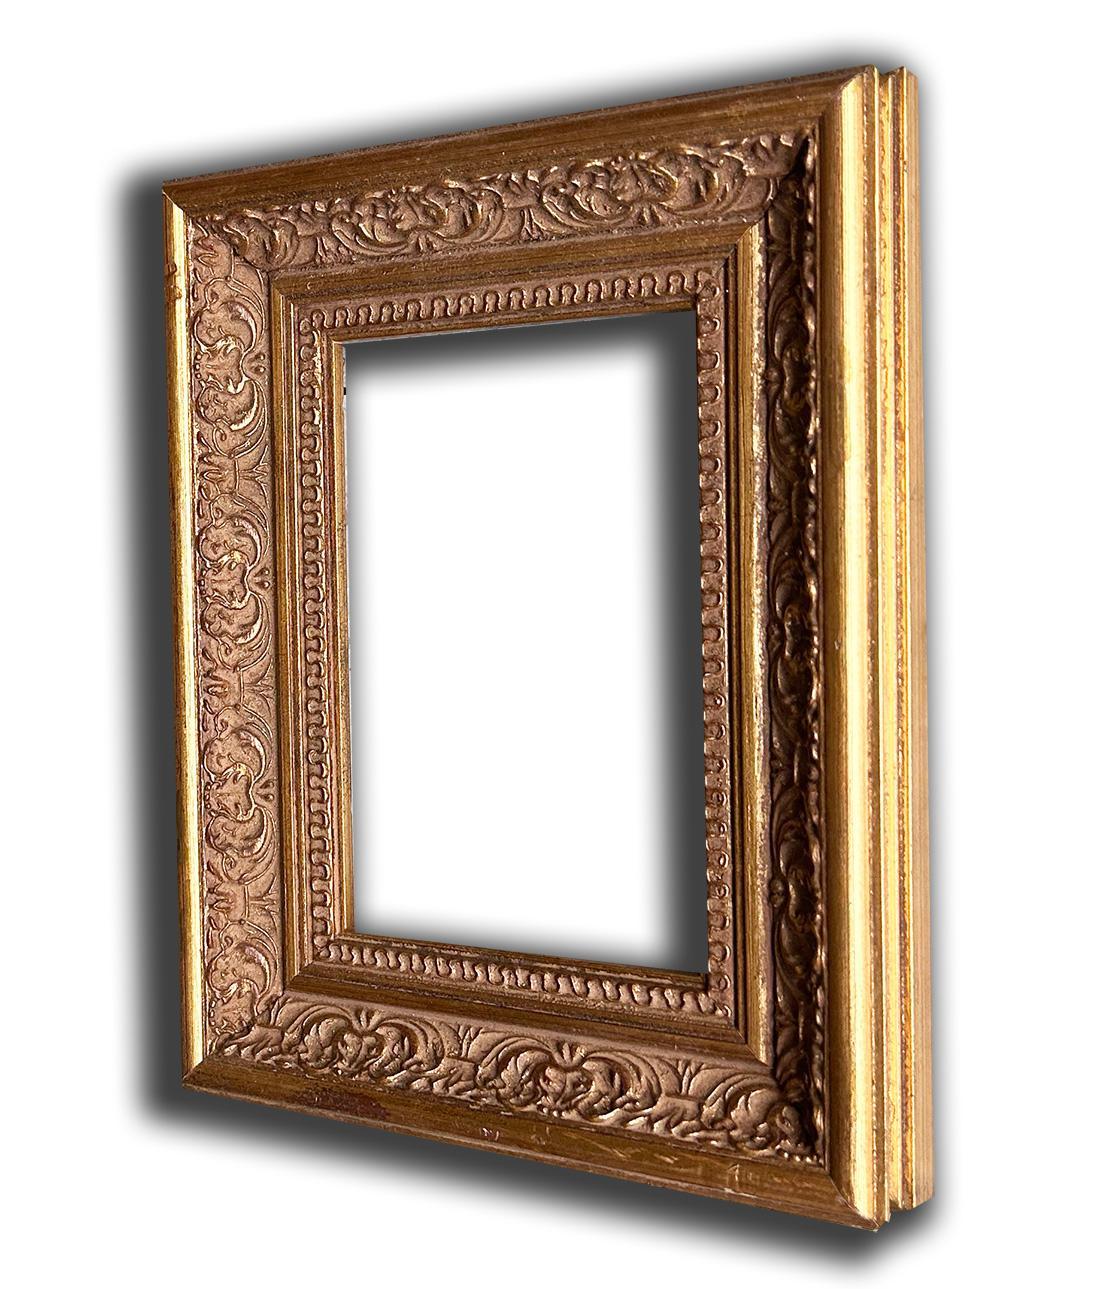 10x15 cm or 4x6 ins photo frame